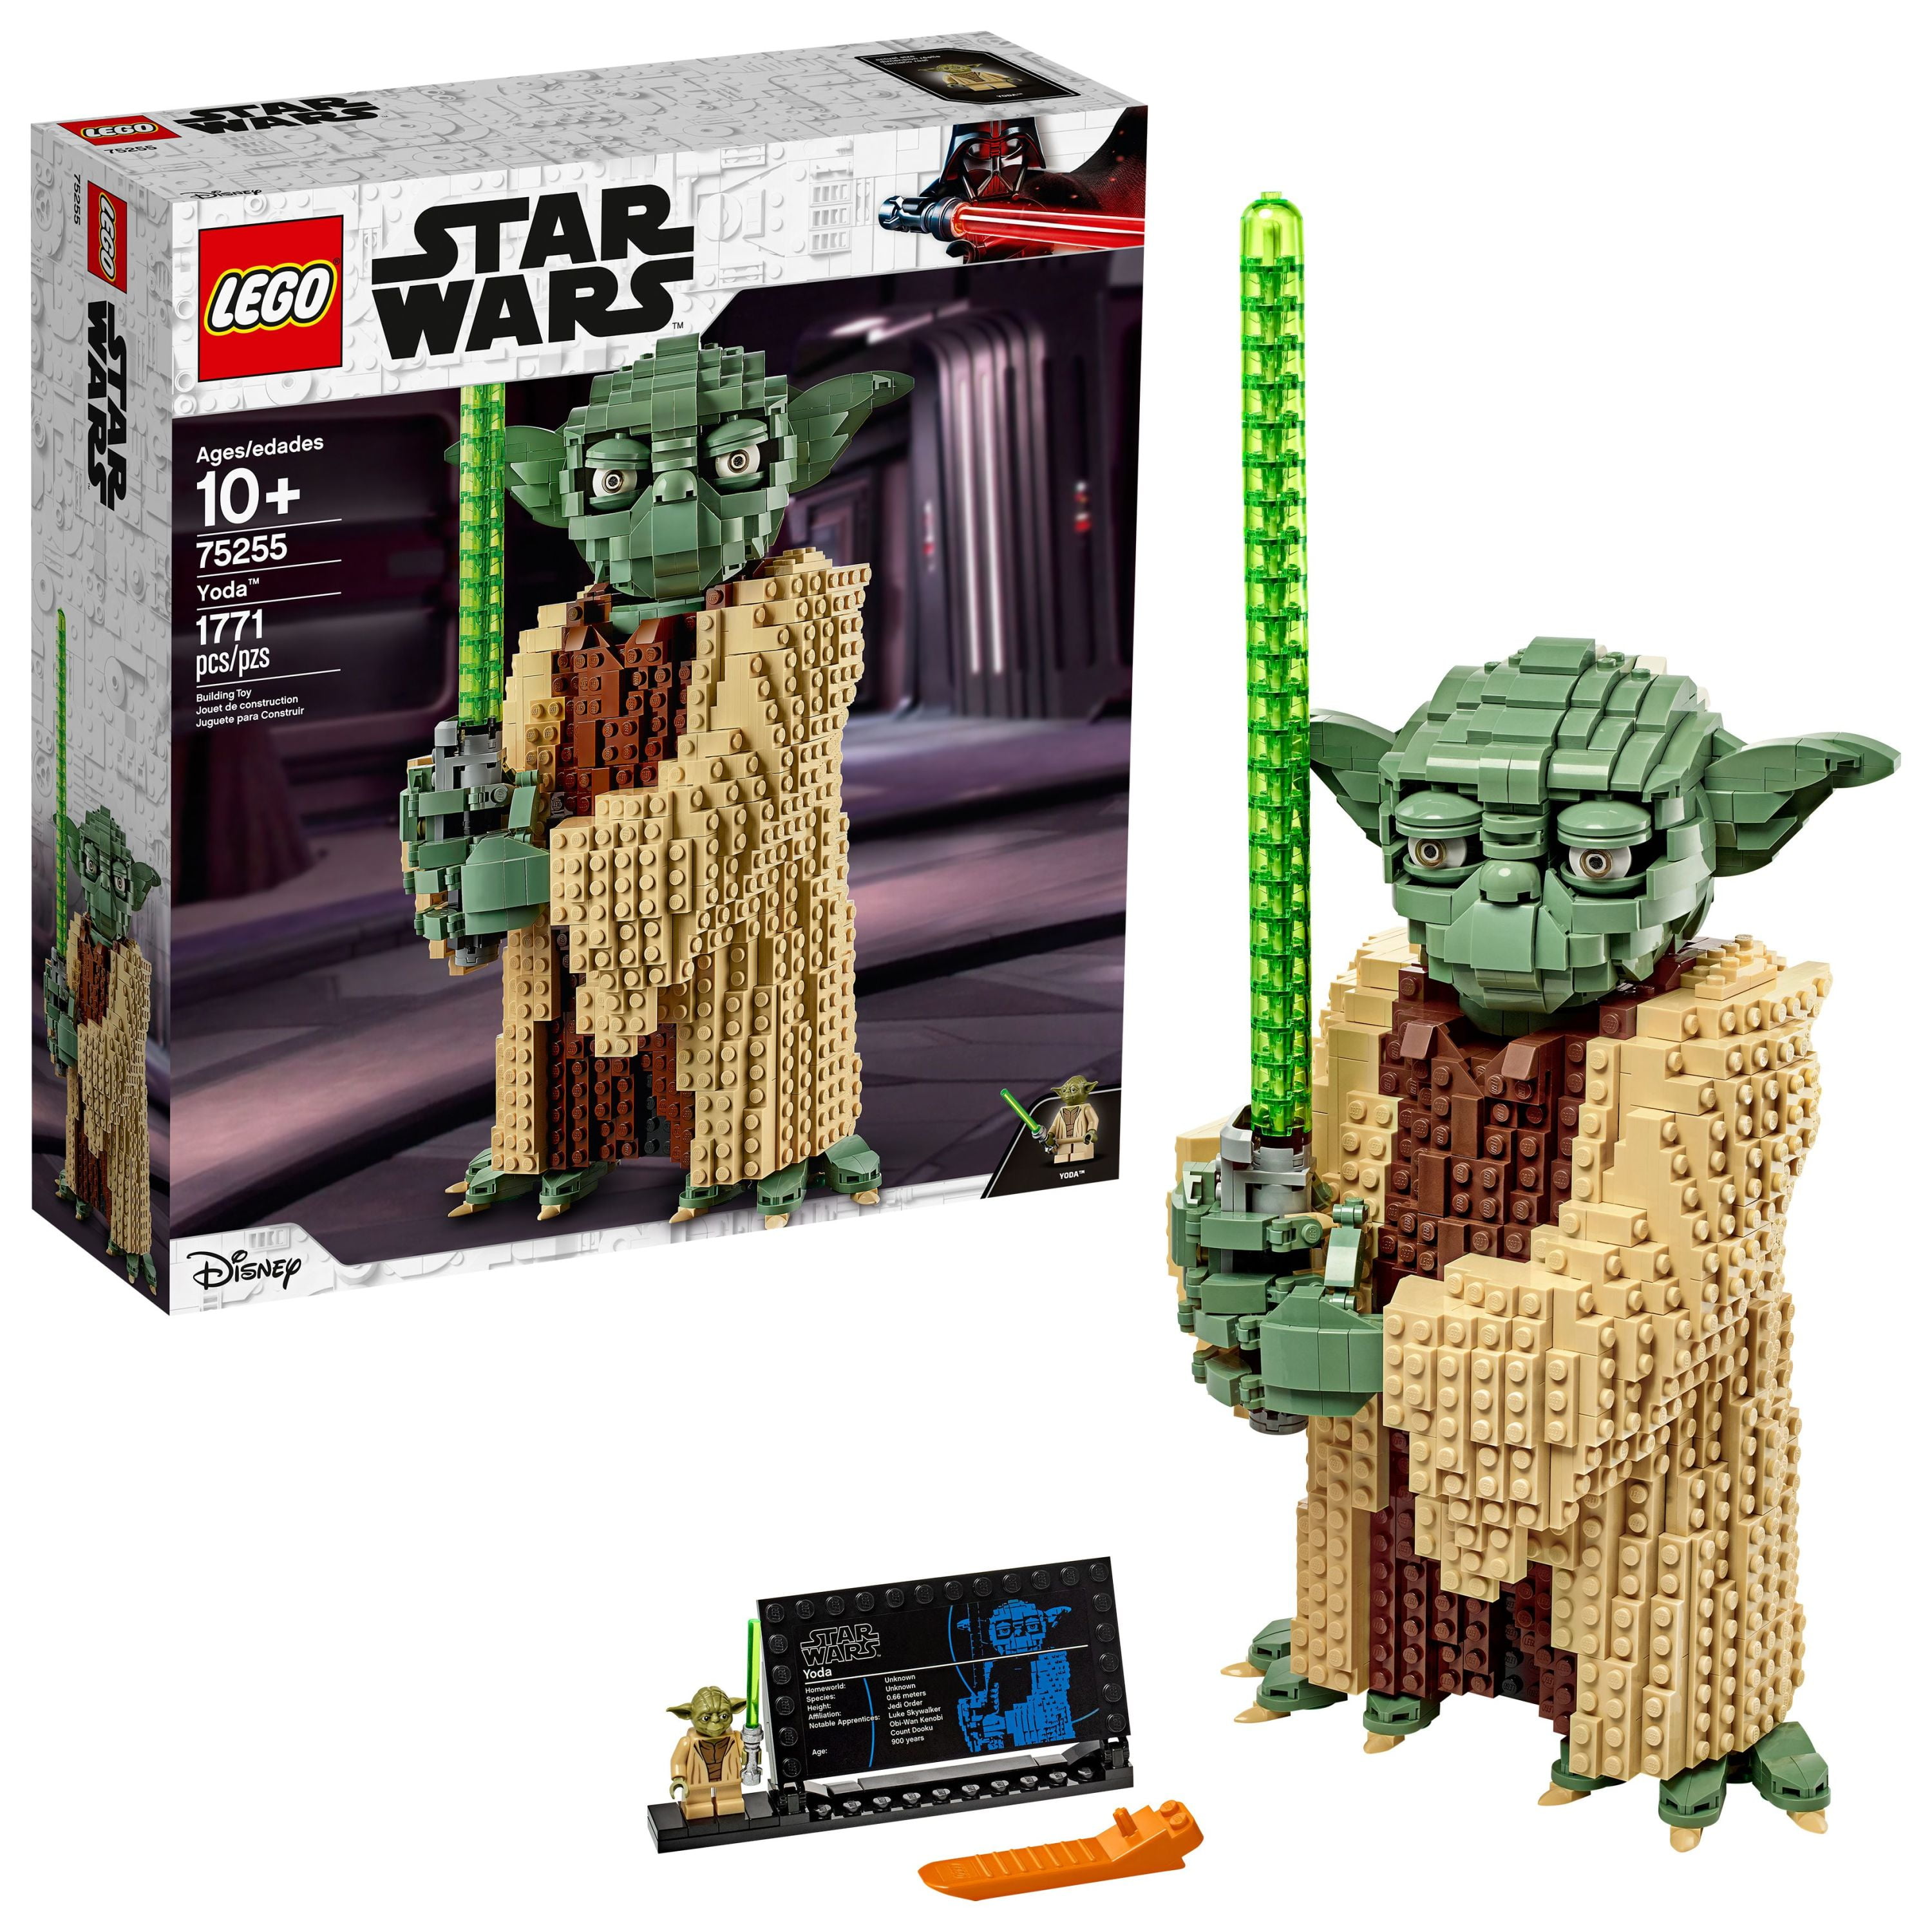 begå rod kaustisk LEGO Star Wars: Attack of the Clones Yoda 75255 Building Toy Set (1,771  Pieces) - Walmart.com